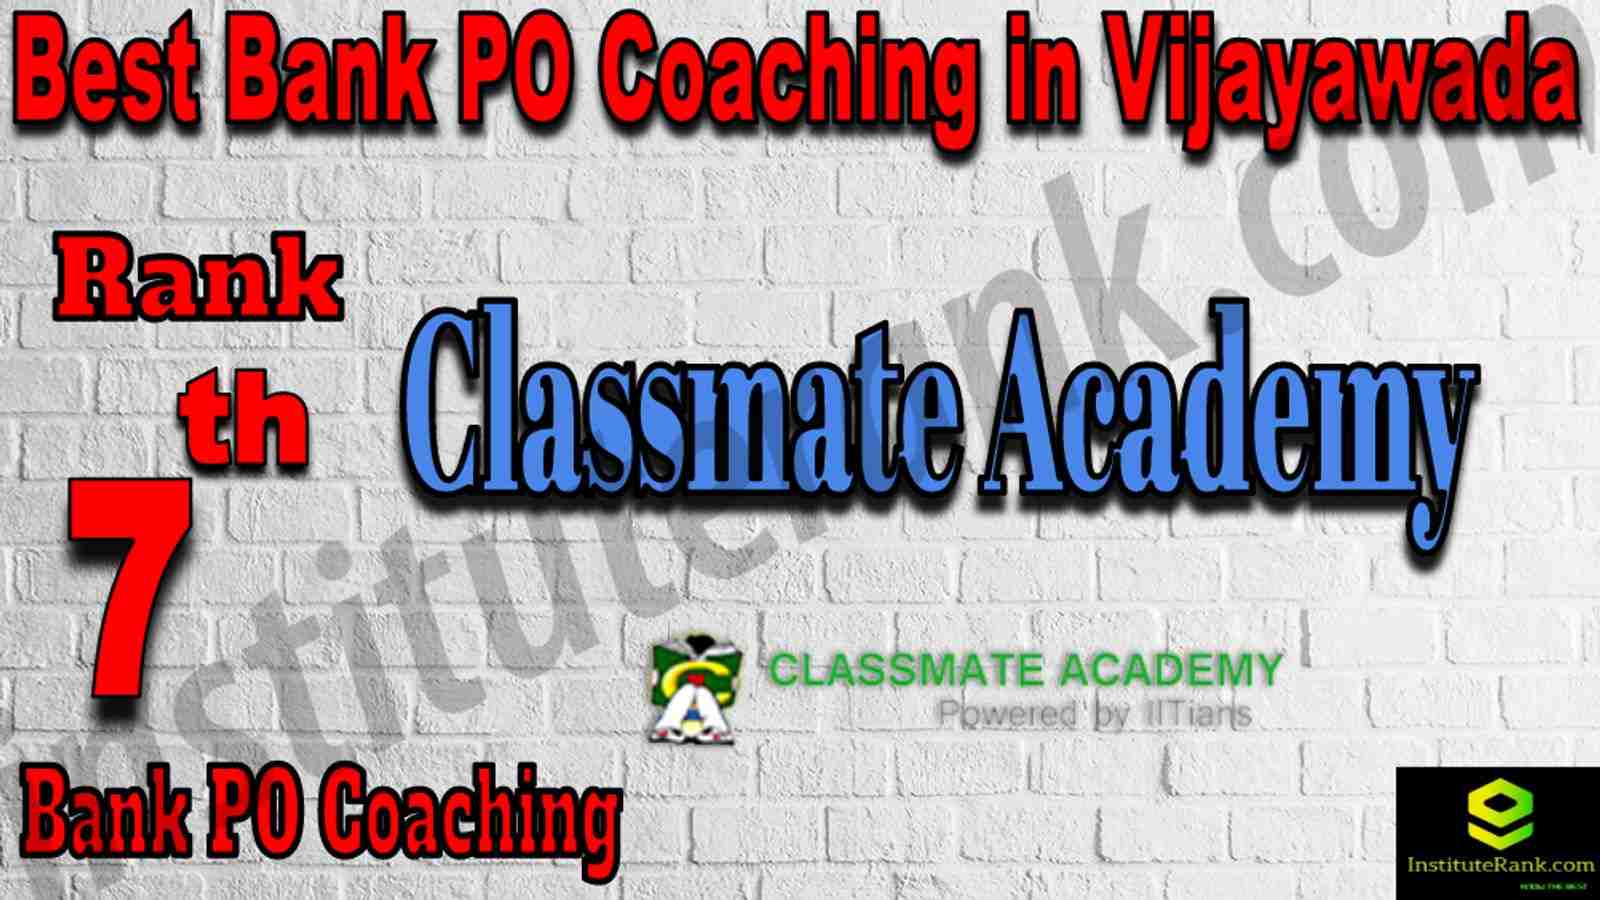 7th Best Bank PO Coaching in Vijayawada